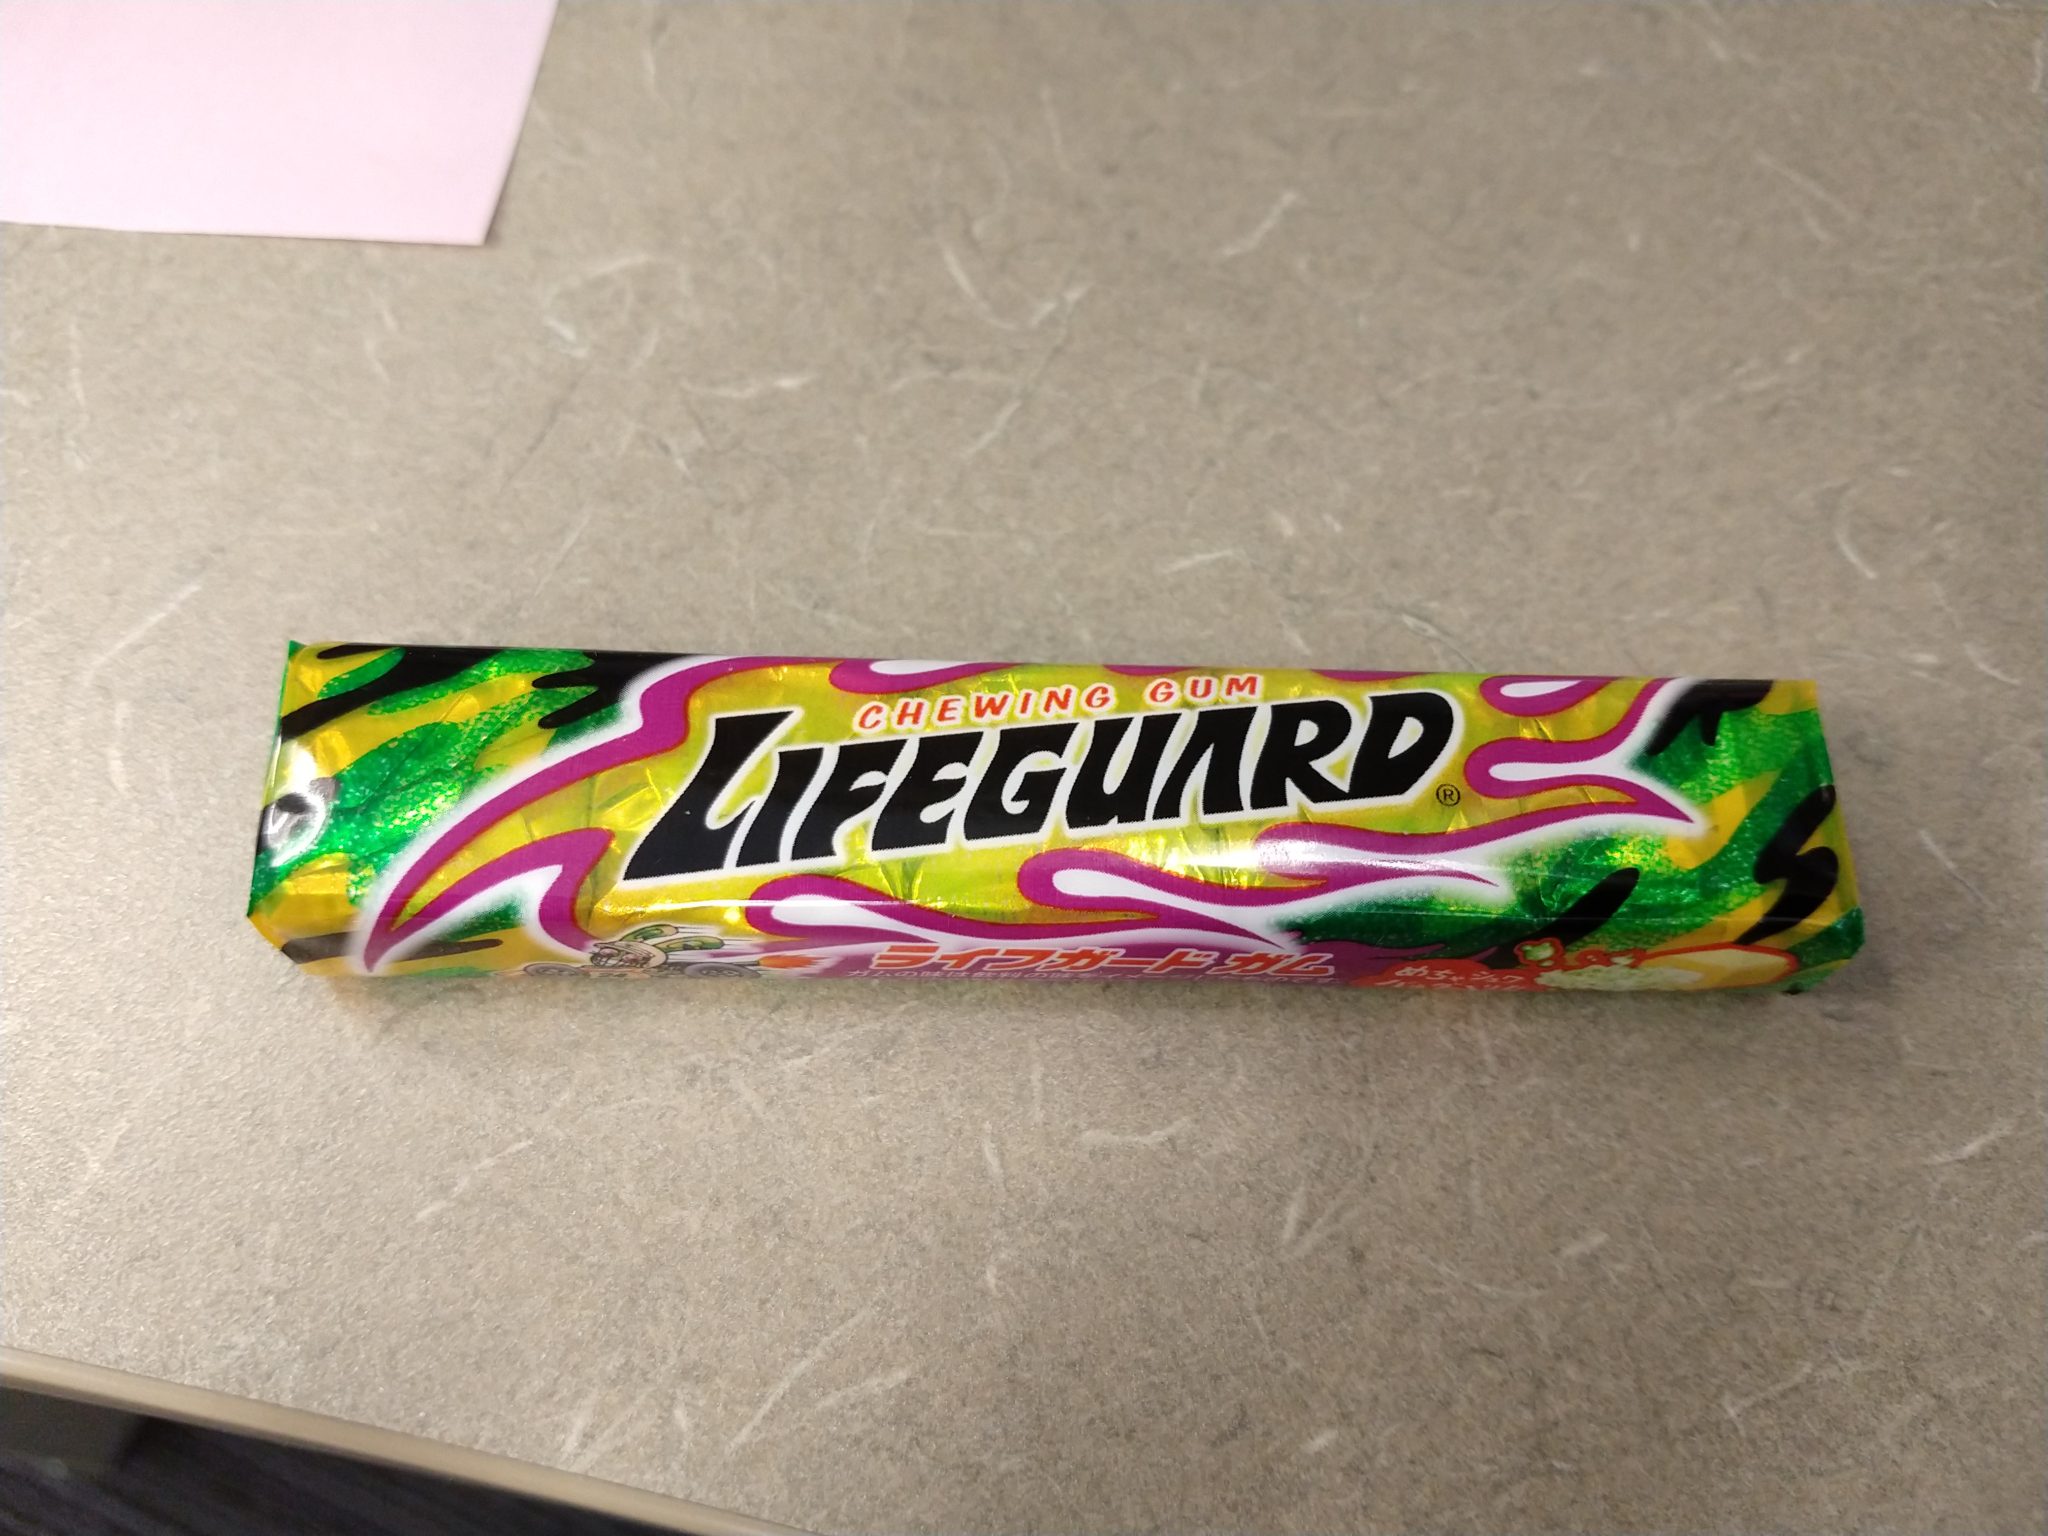 Lifeguard Chewing Gum